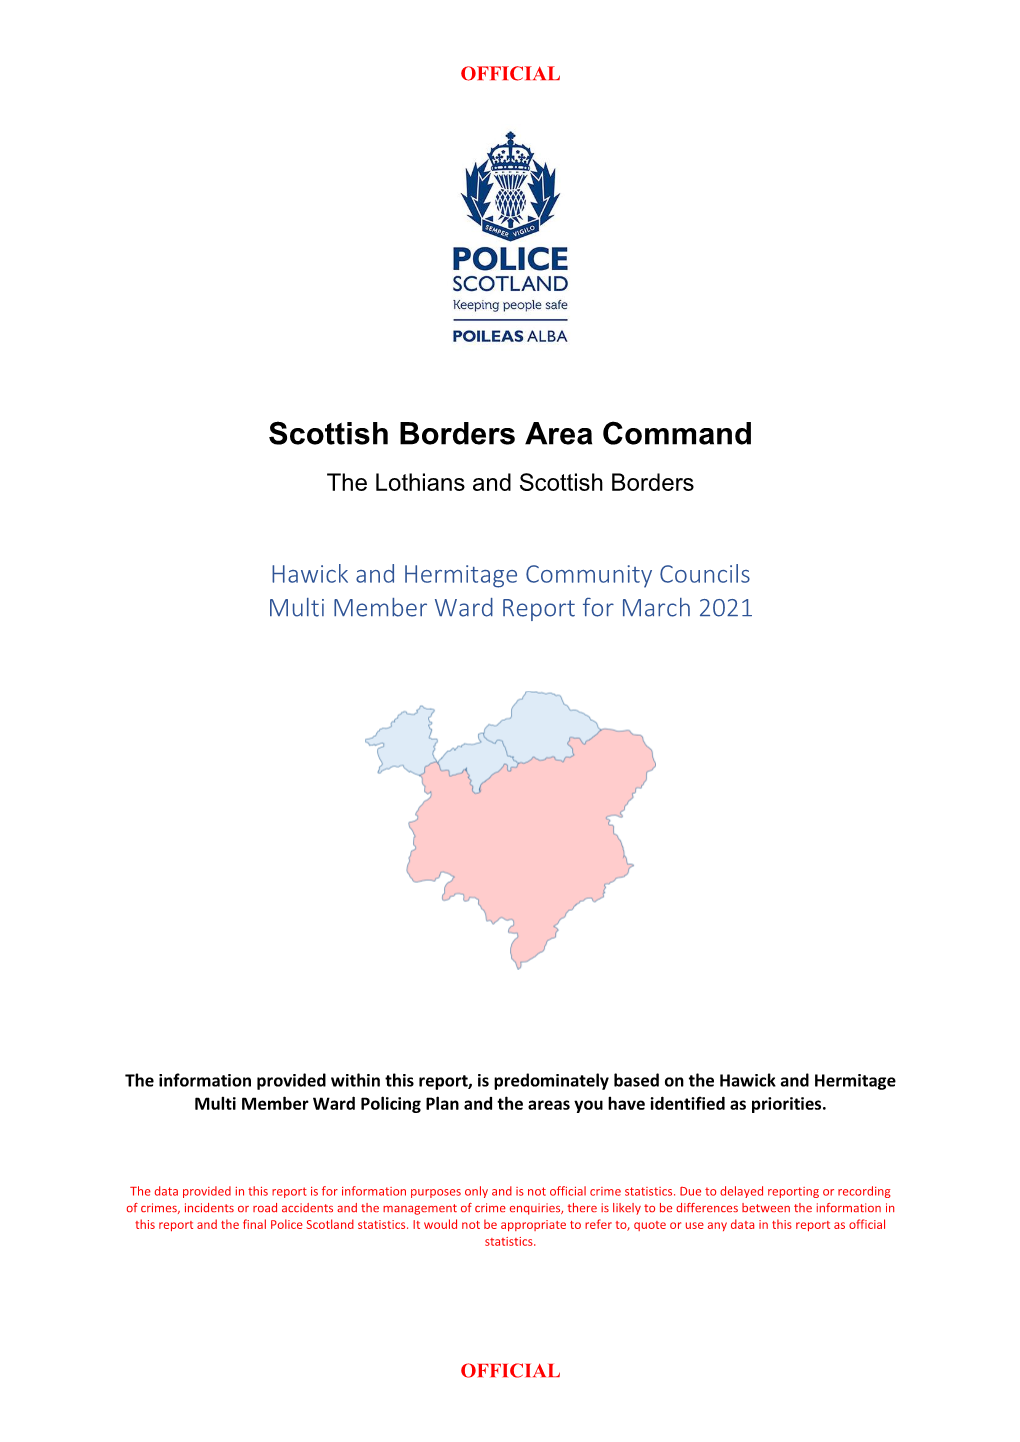 Scottish Borders Area Command the Lothians and Scottish Borders